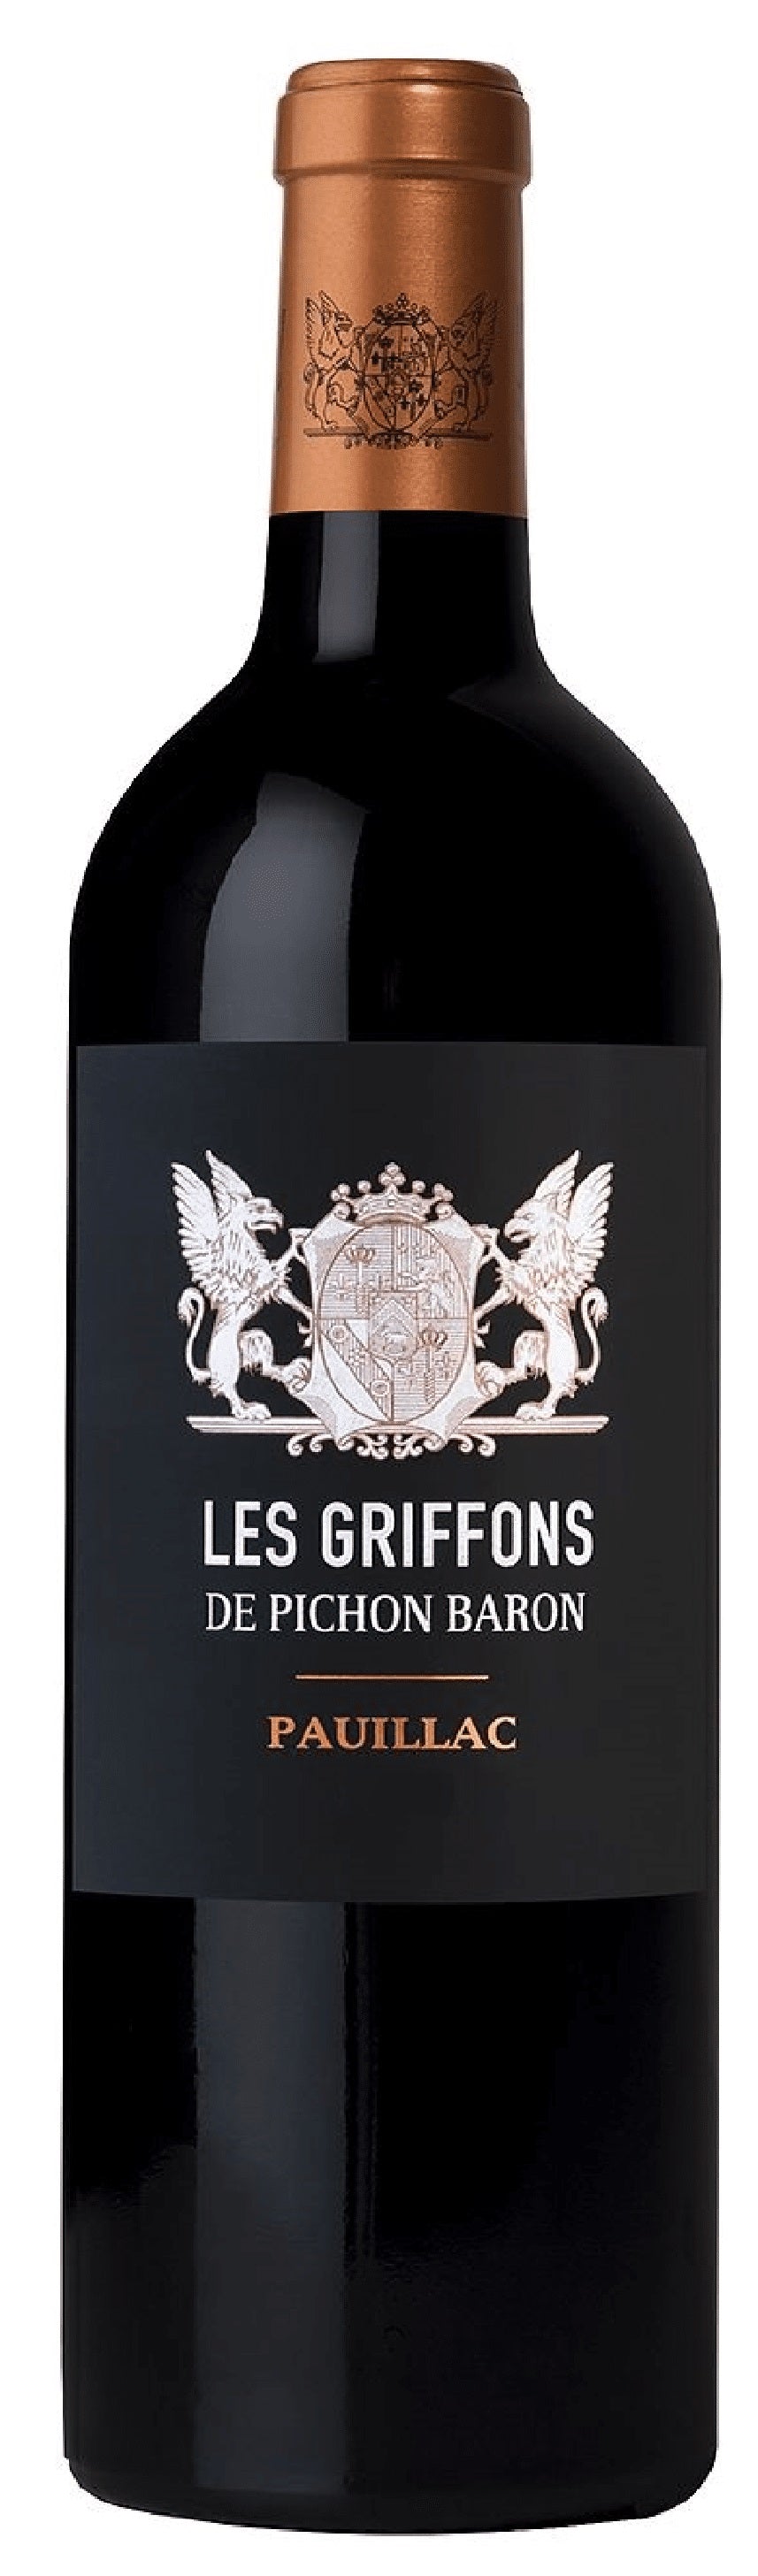 CH GRIFFONS DE PICHON BARON